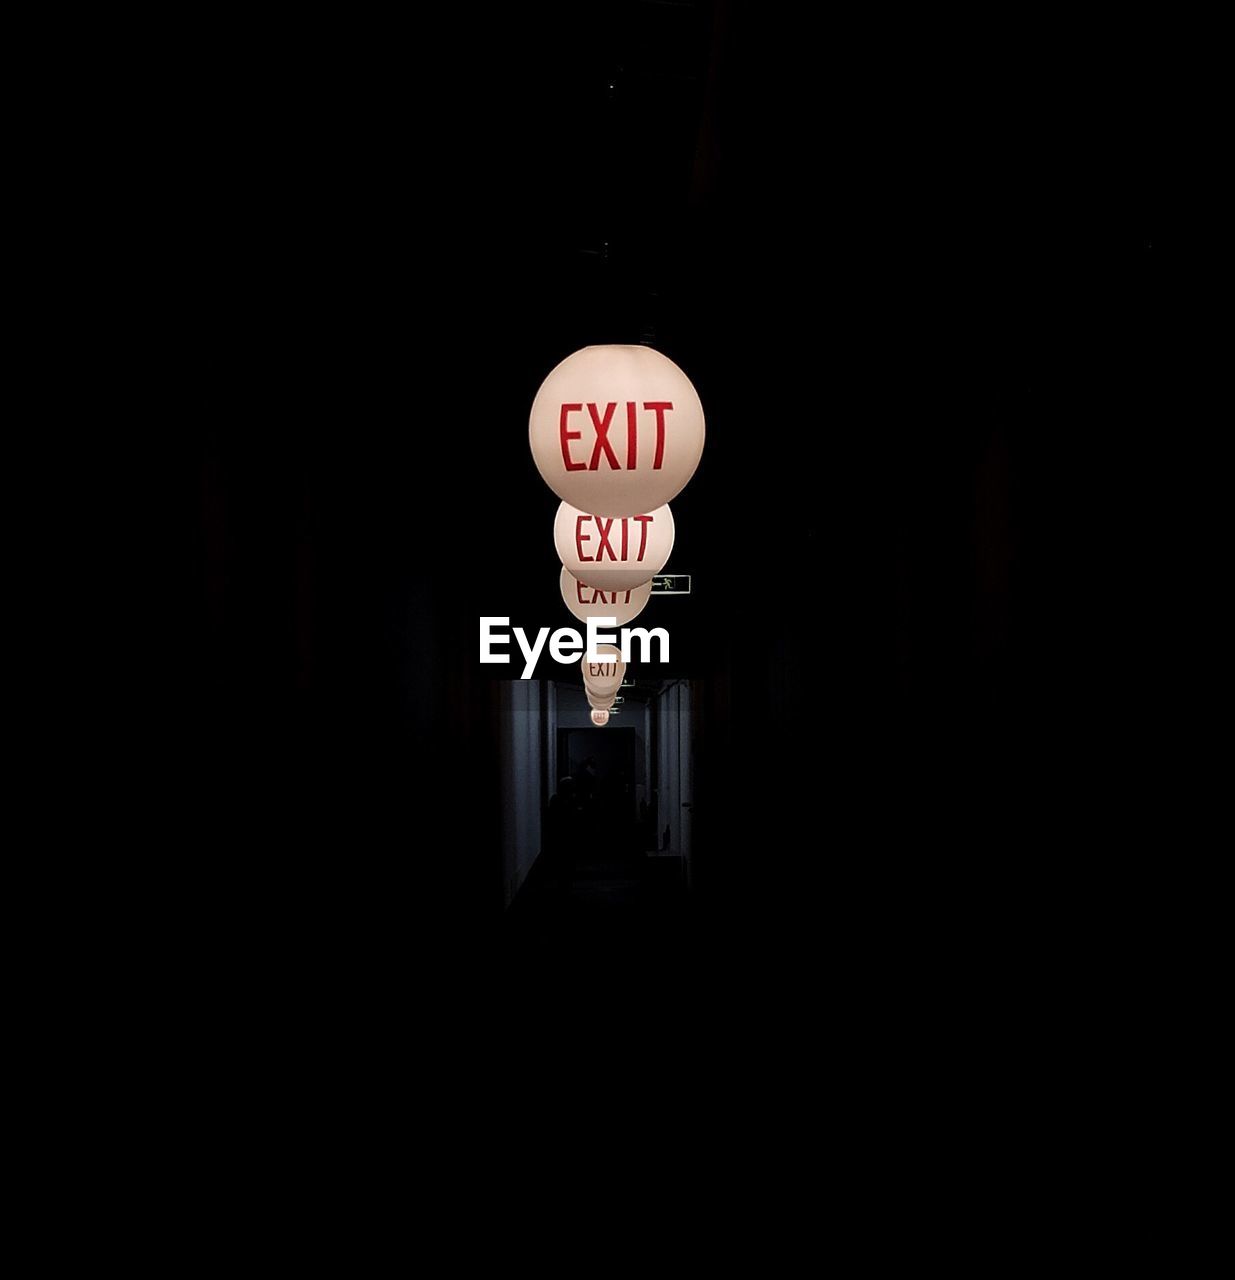 Exit text on illuminated sphere in darkroom